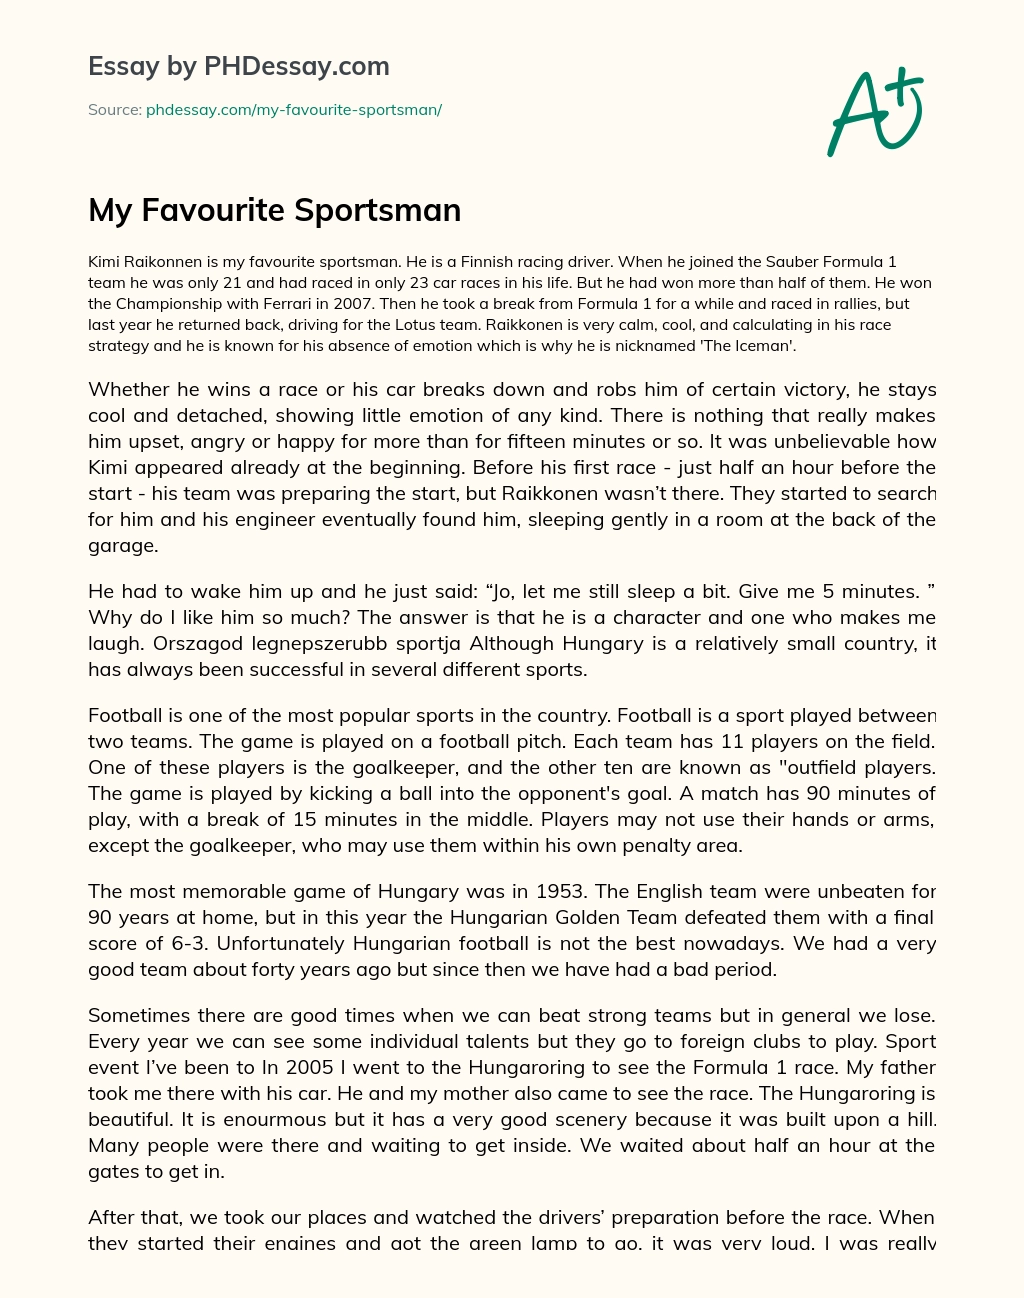 essay for sportsman